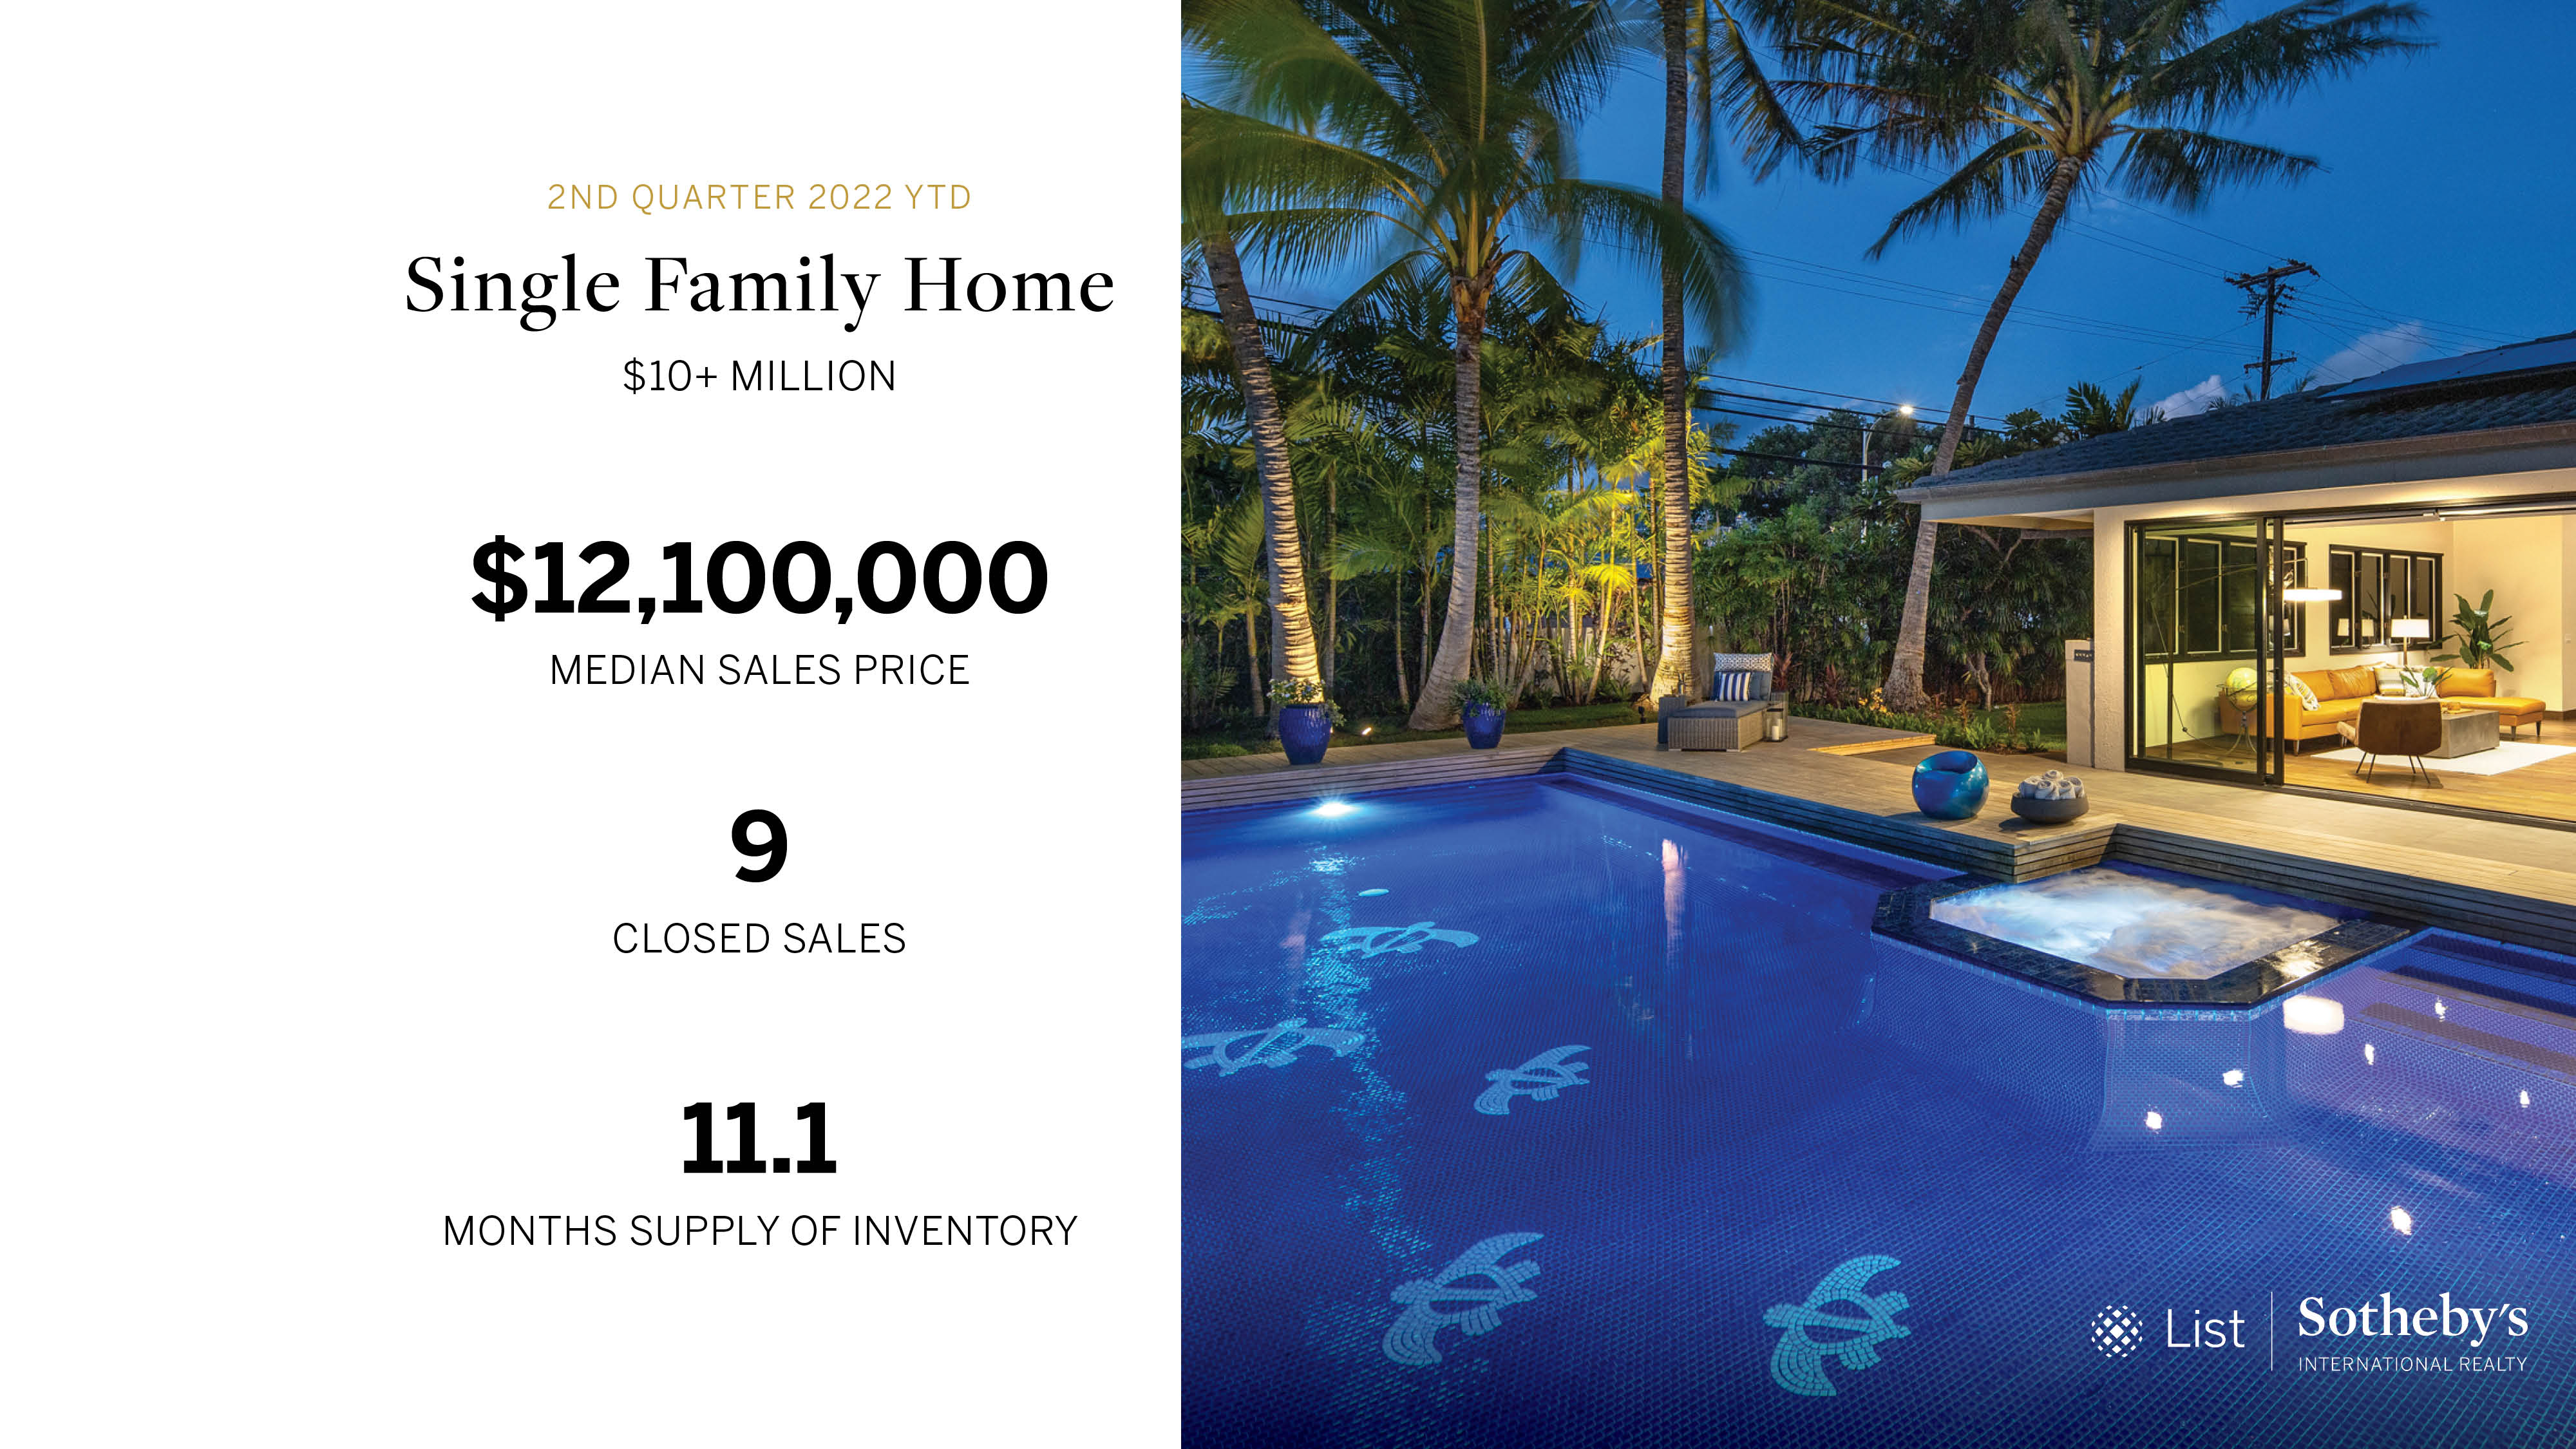 Oahu Luxury Market Stats for Q2 2022 - Single Family Home Segment 4